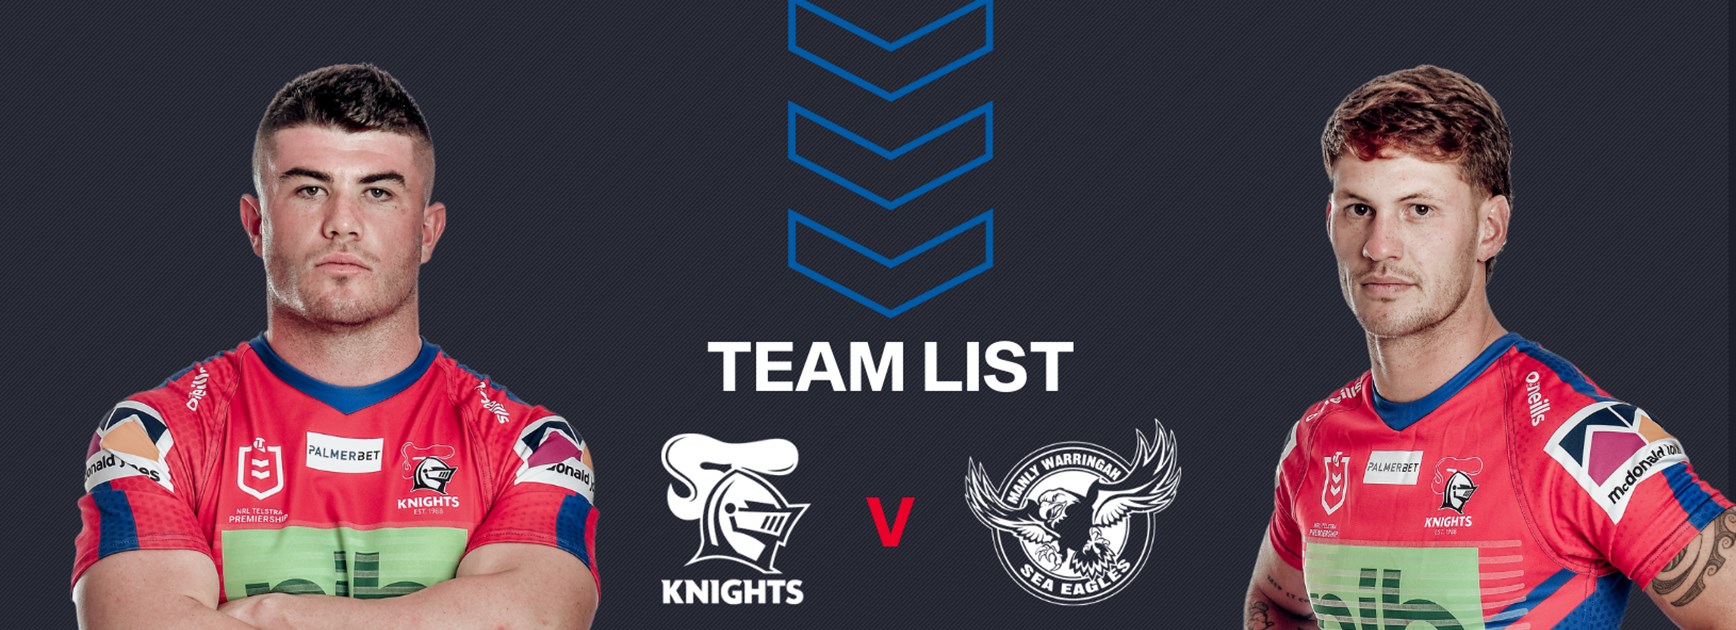 Sea Eagles v Knights Round 18 NRL team list